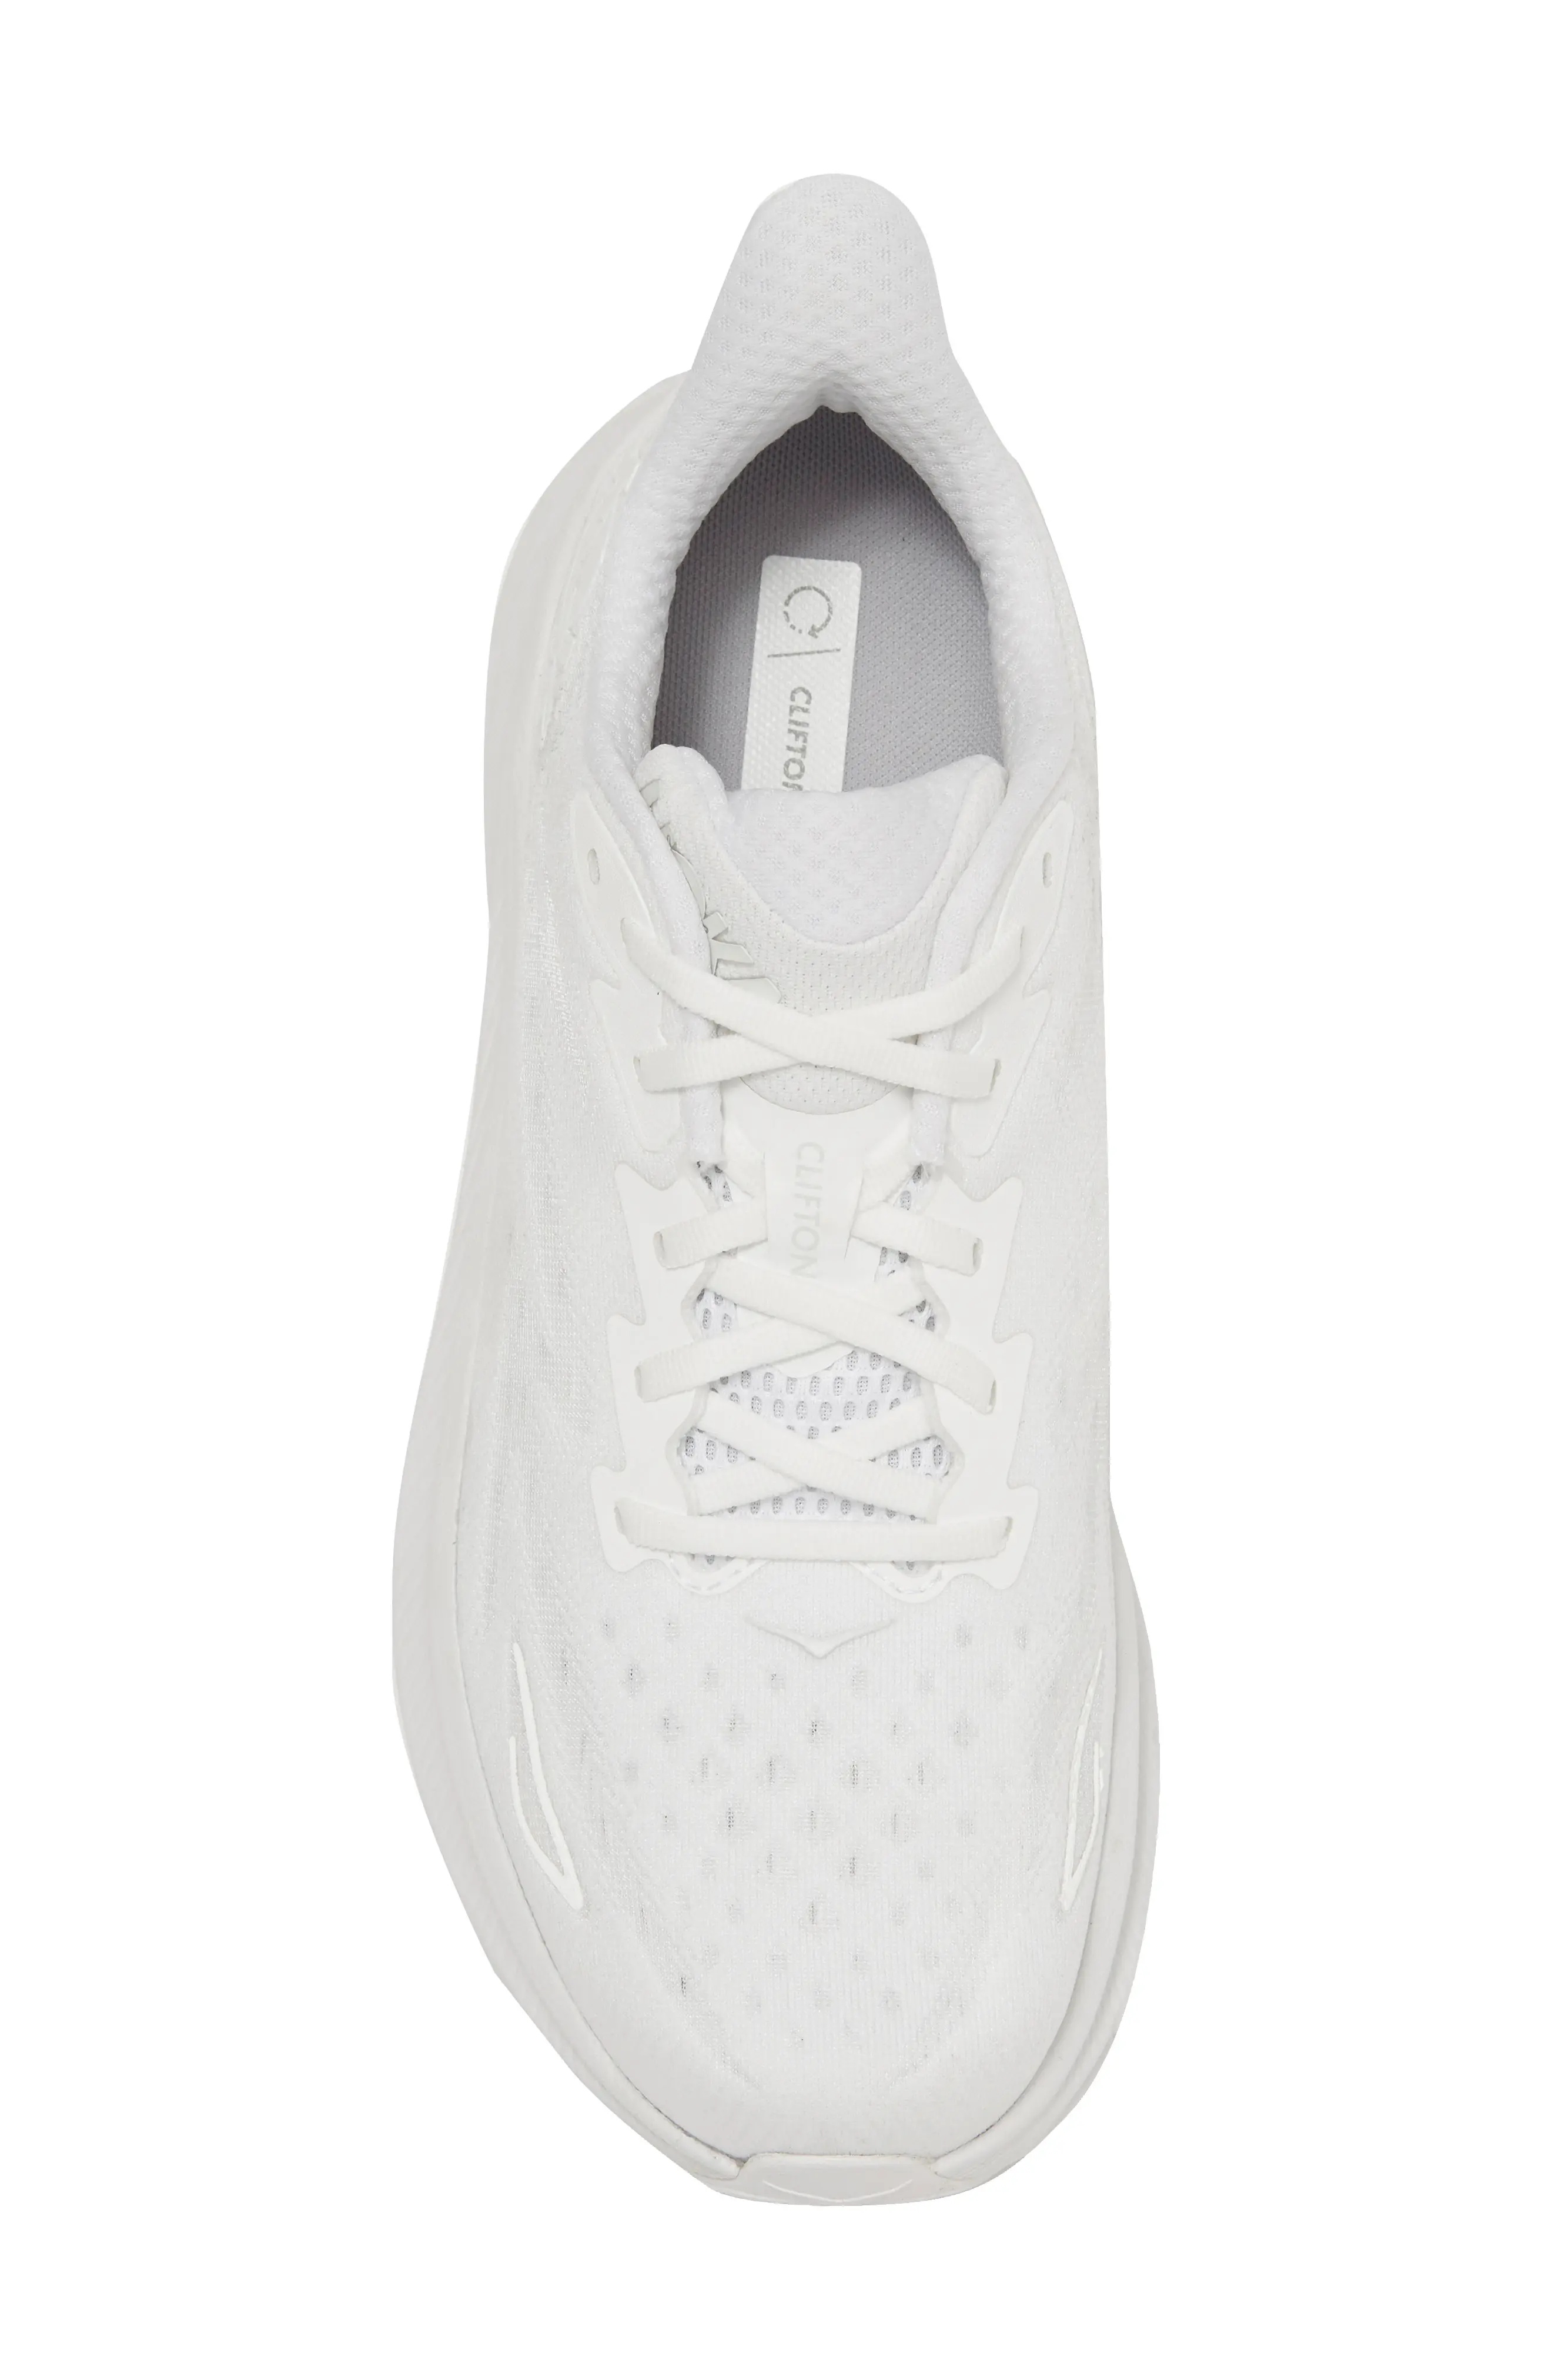 Clifton 9 Running Shoe in White /White - 3